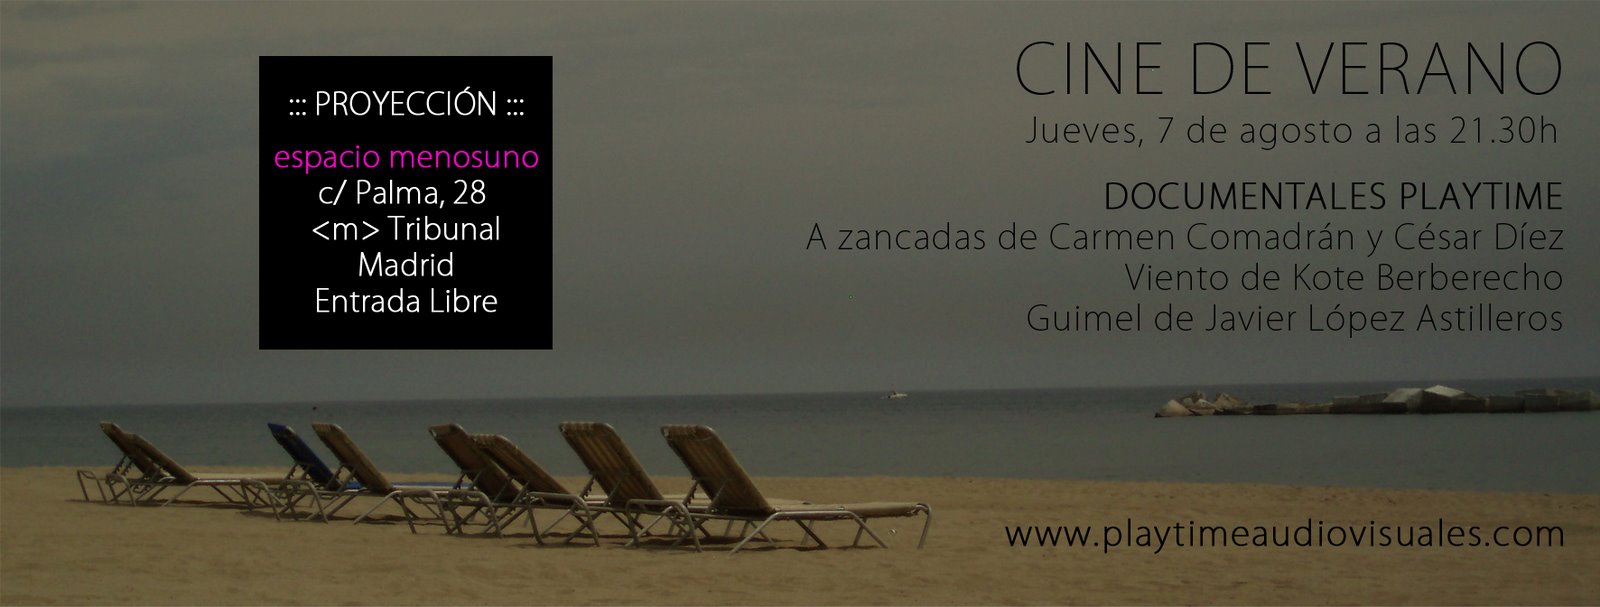 [flyer_cine_de_verano.jpg]